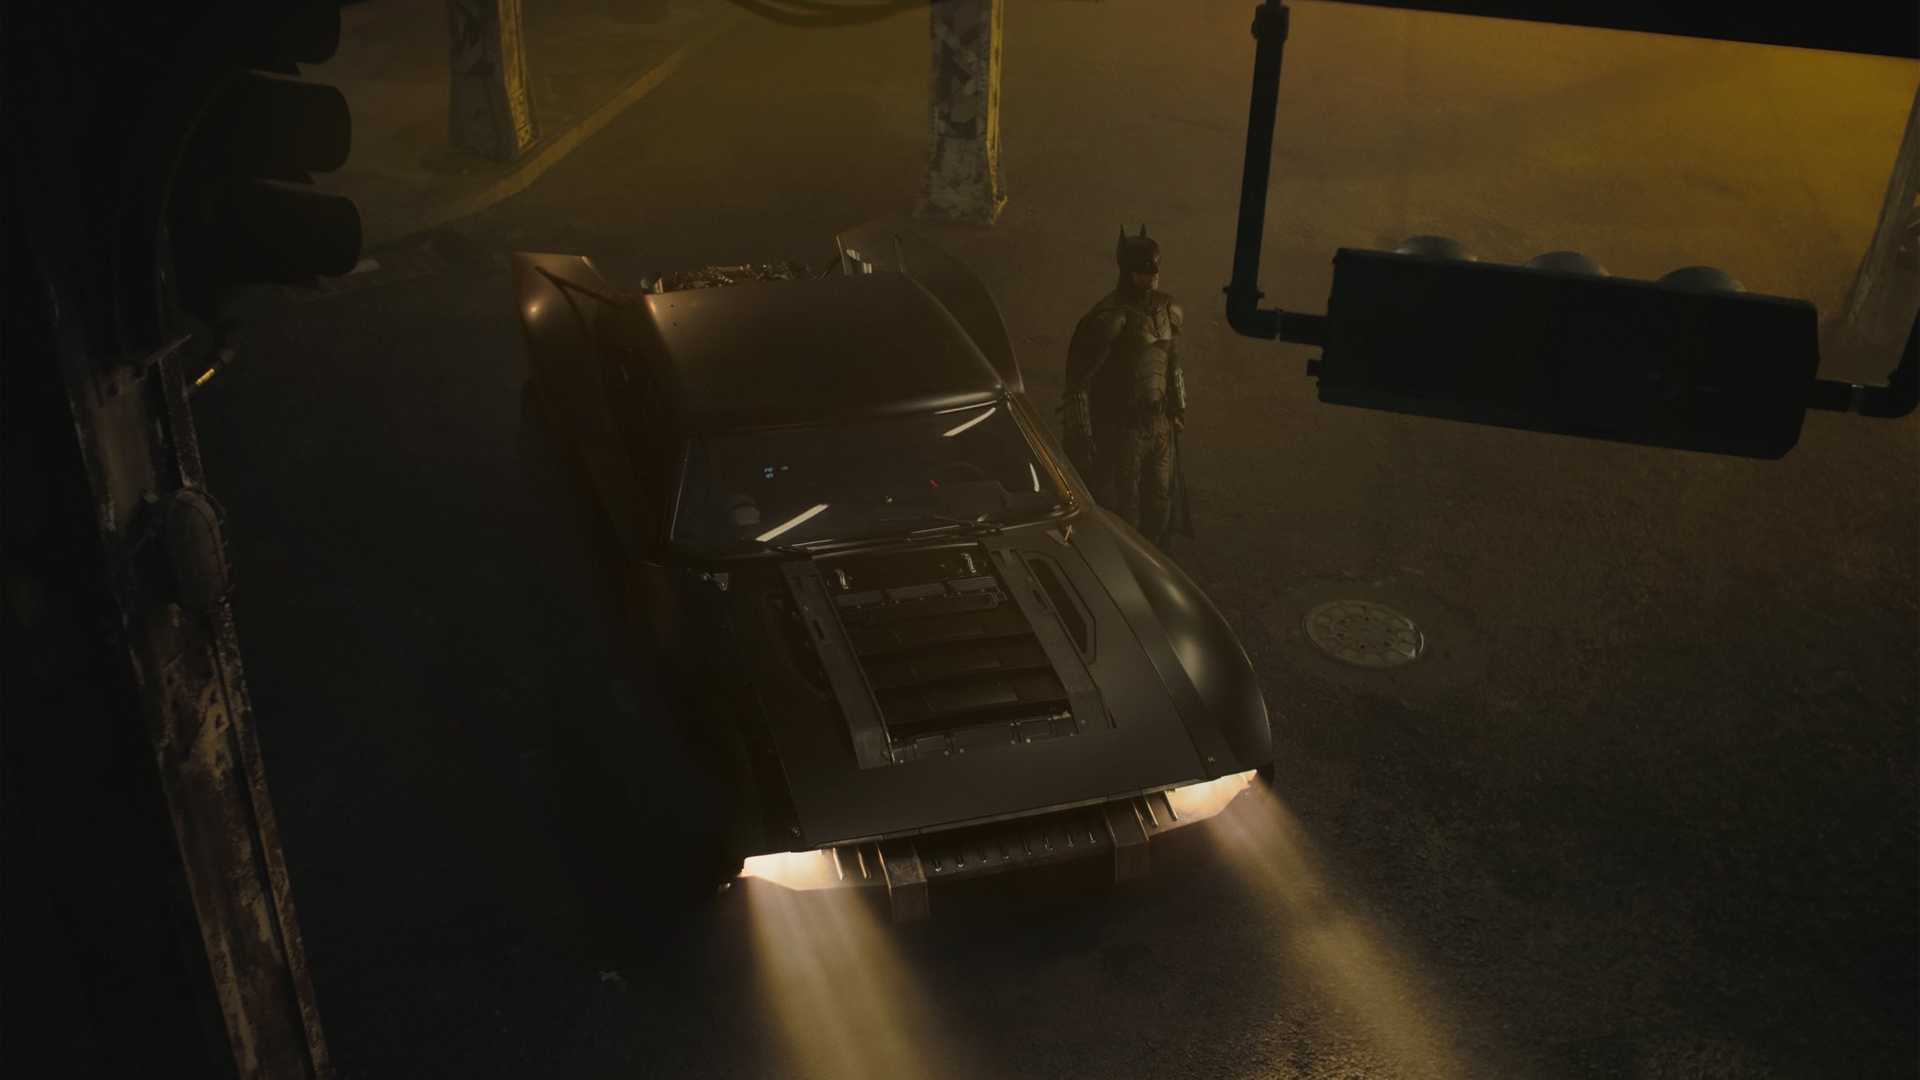 New Batmobile For Robert Pattinson's Batman Movie Revealed!